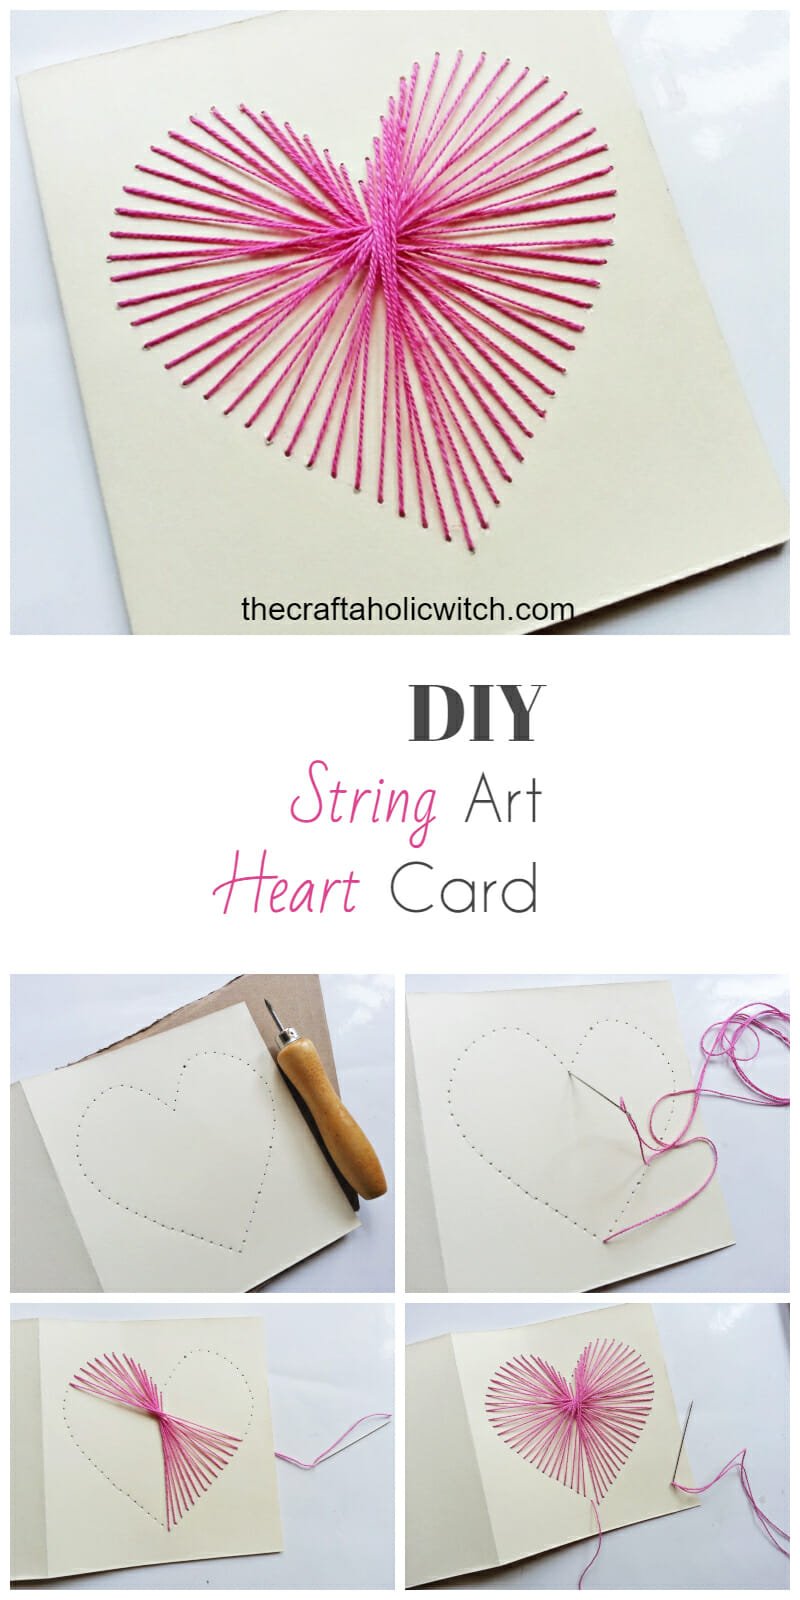 String art heart Card pin image - Create String-Art Heart Card